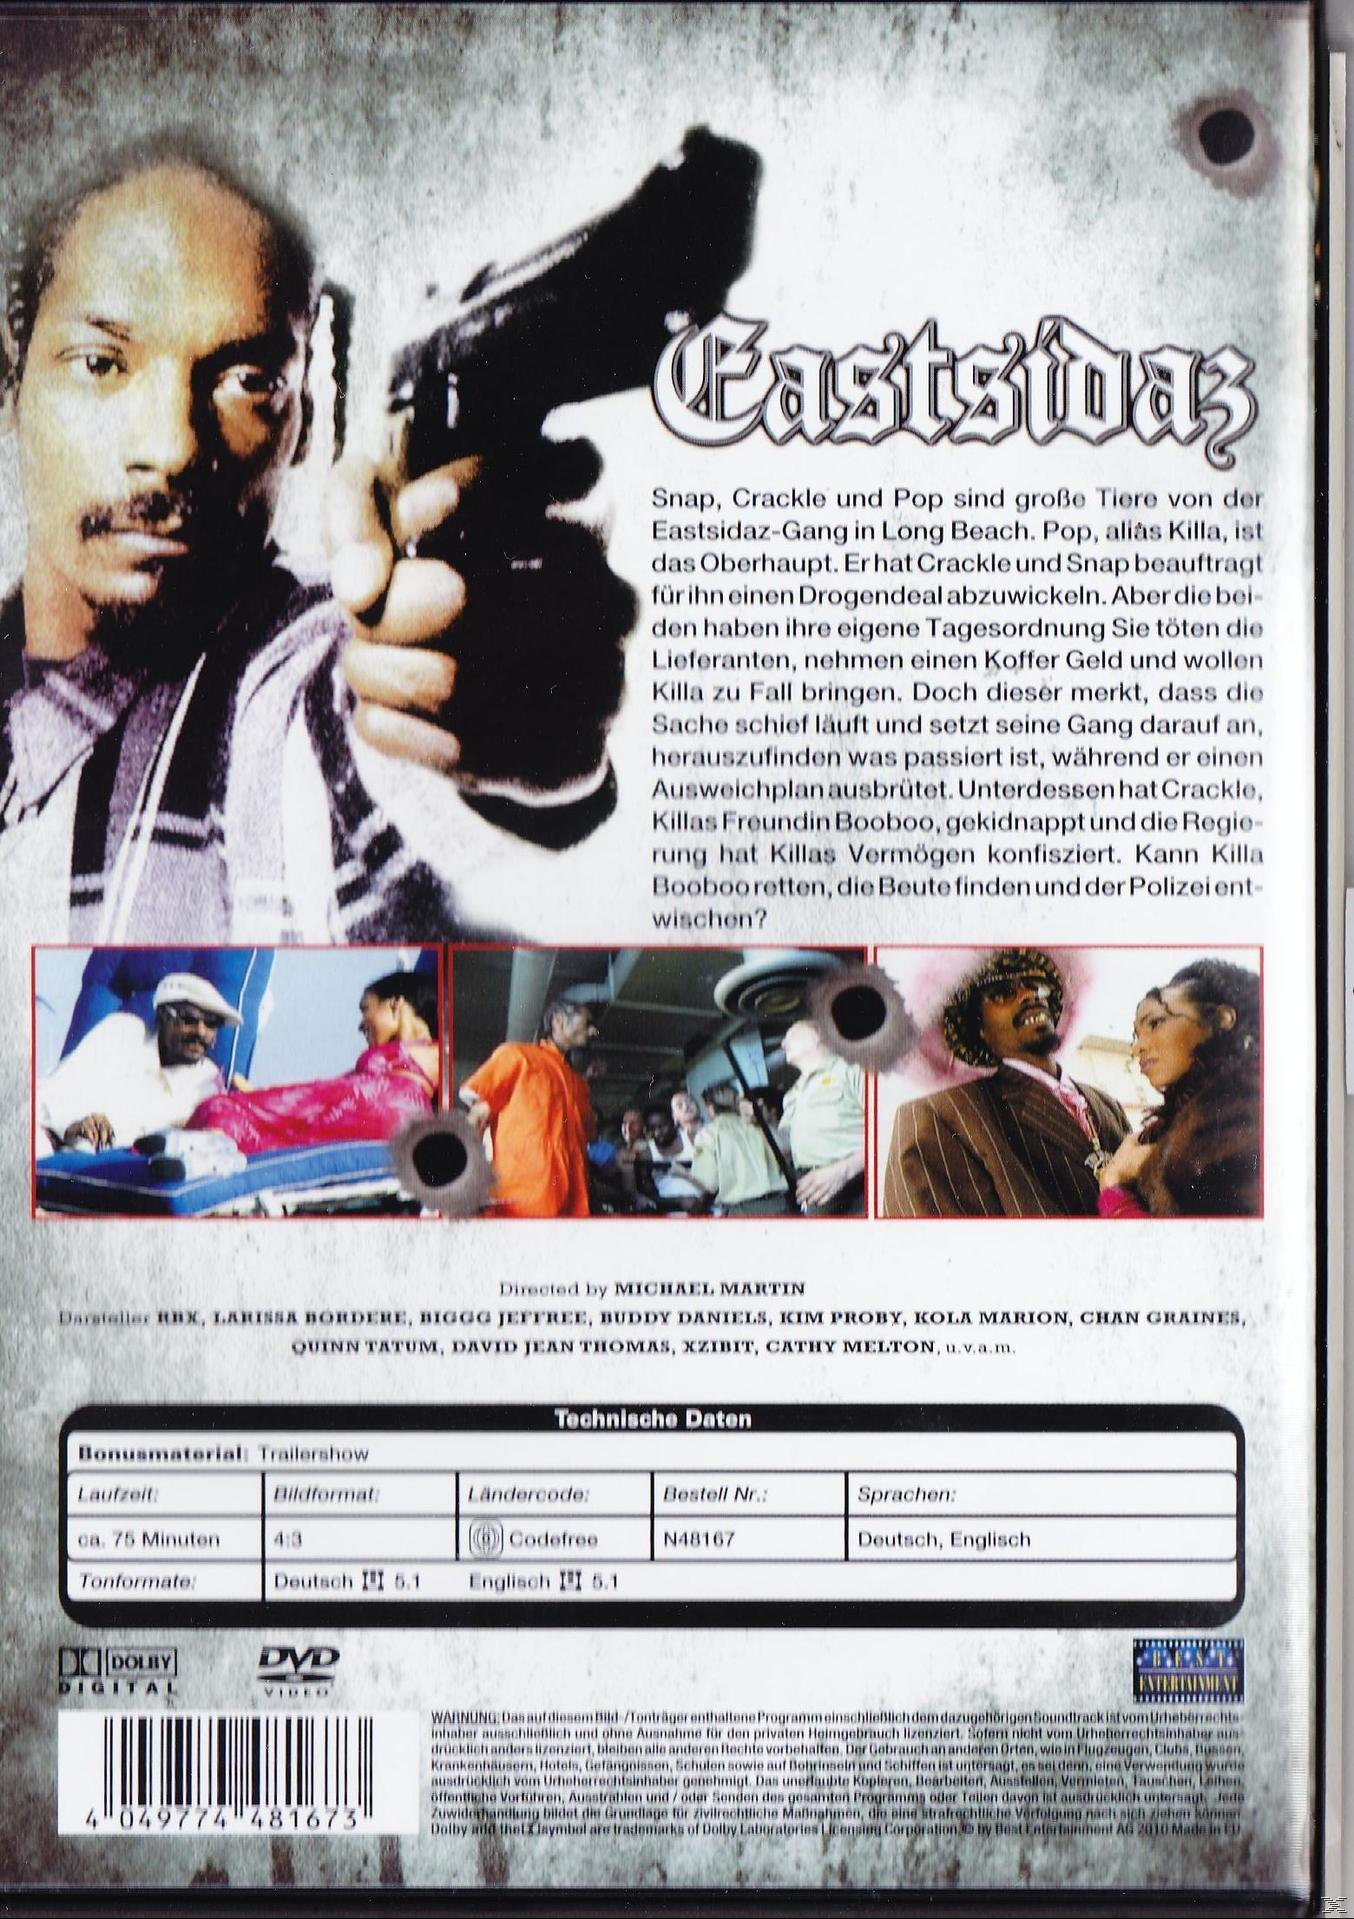 Eastsidaz DVD Snoop Dogg: